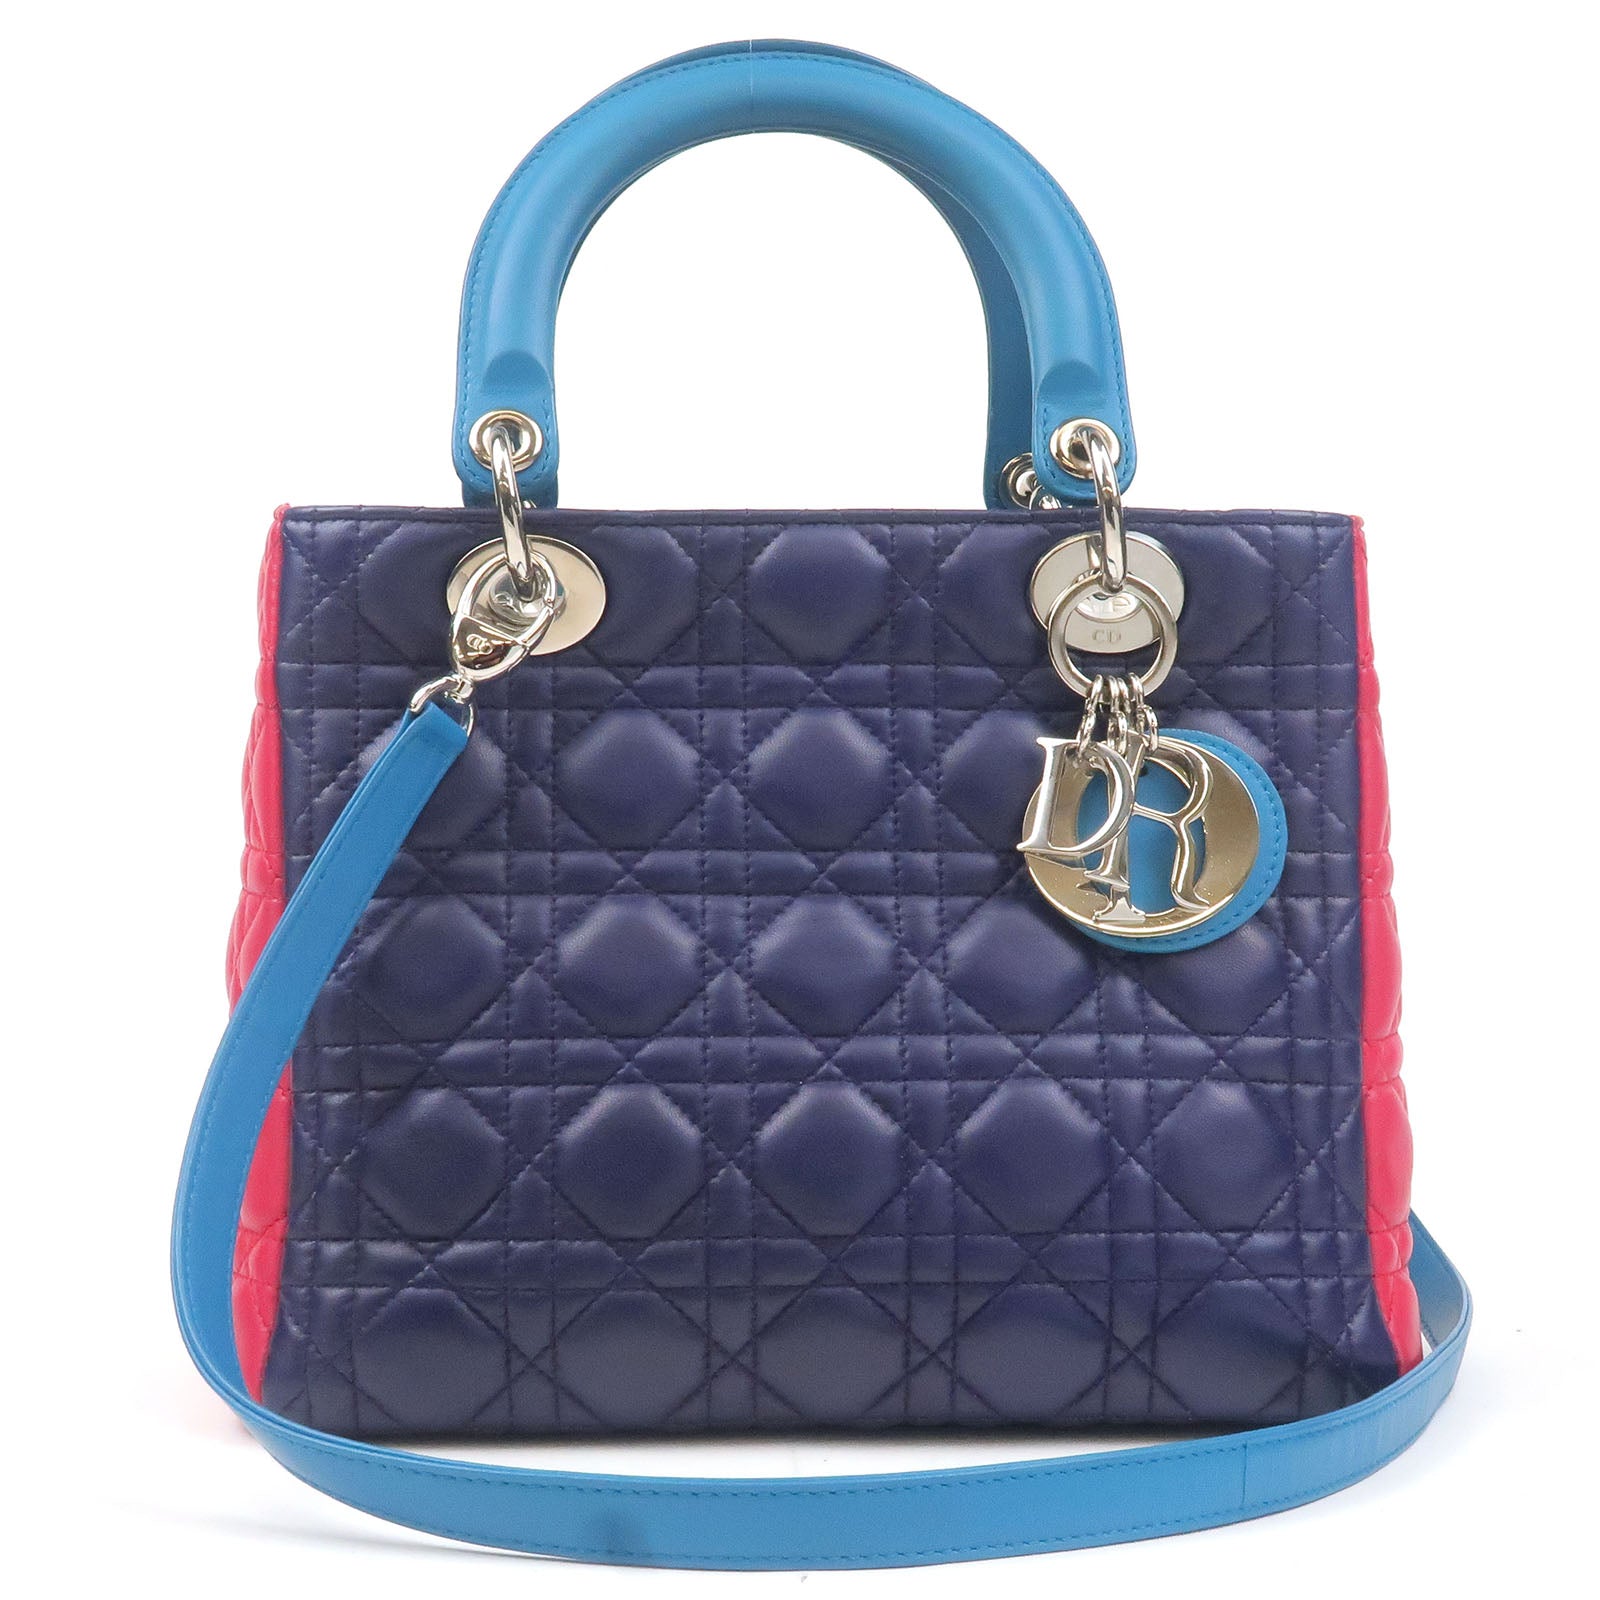 Christian-Dior-Lady-Dior-Medium-Leather-2Way-Bag-Navy-Blue-Pink